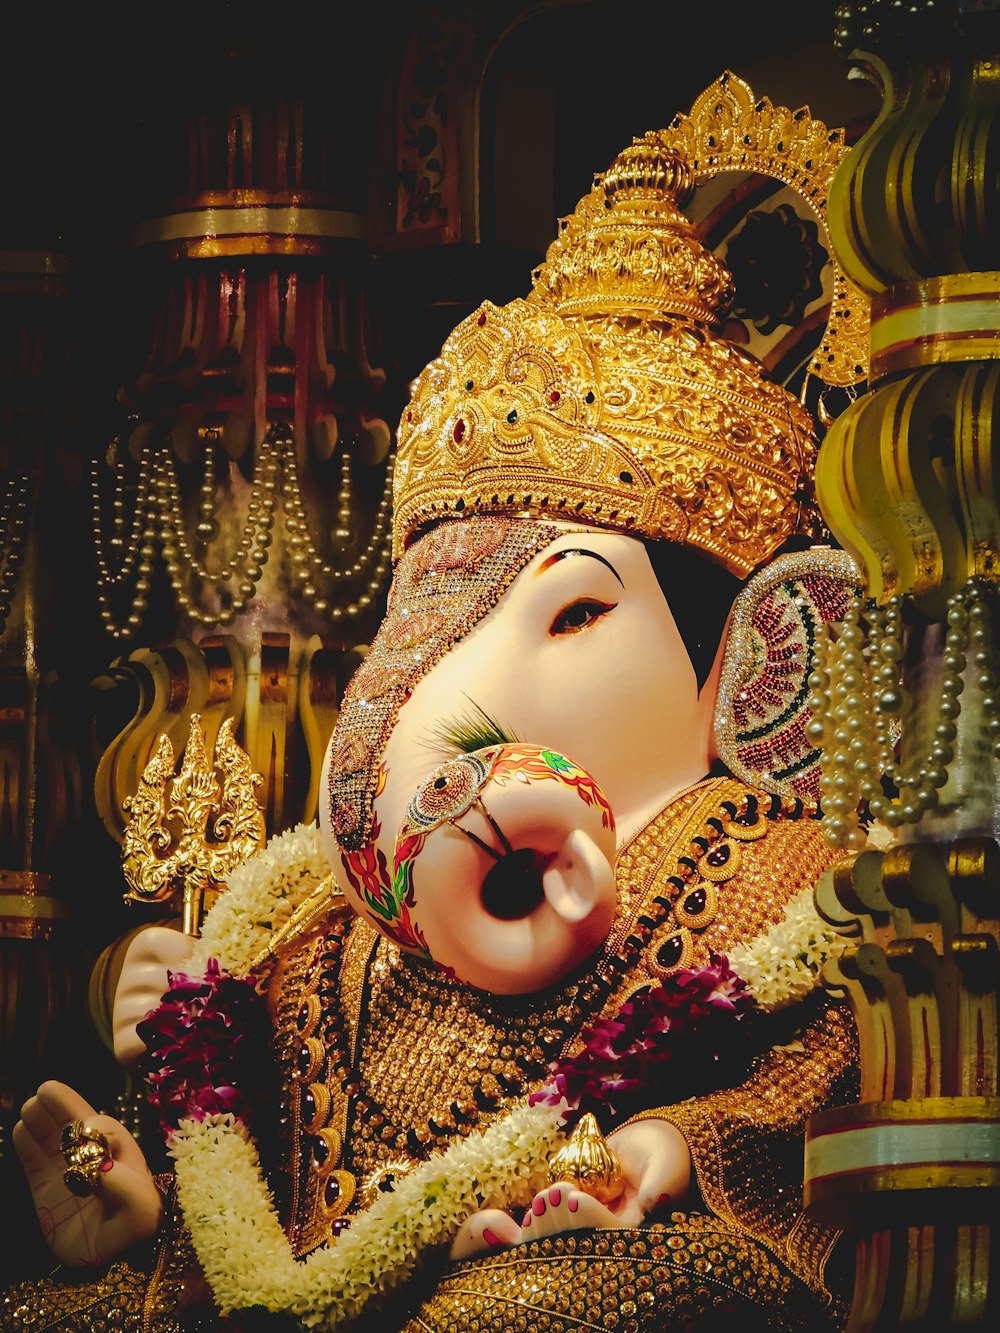 Lord ganesha figurine photo – Free Pune Image on Unsplash